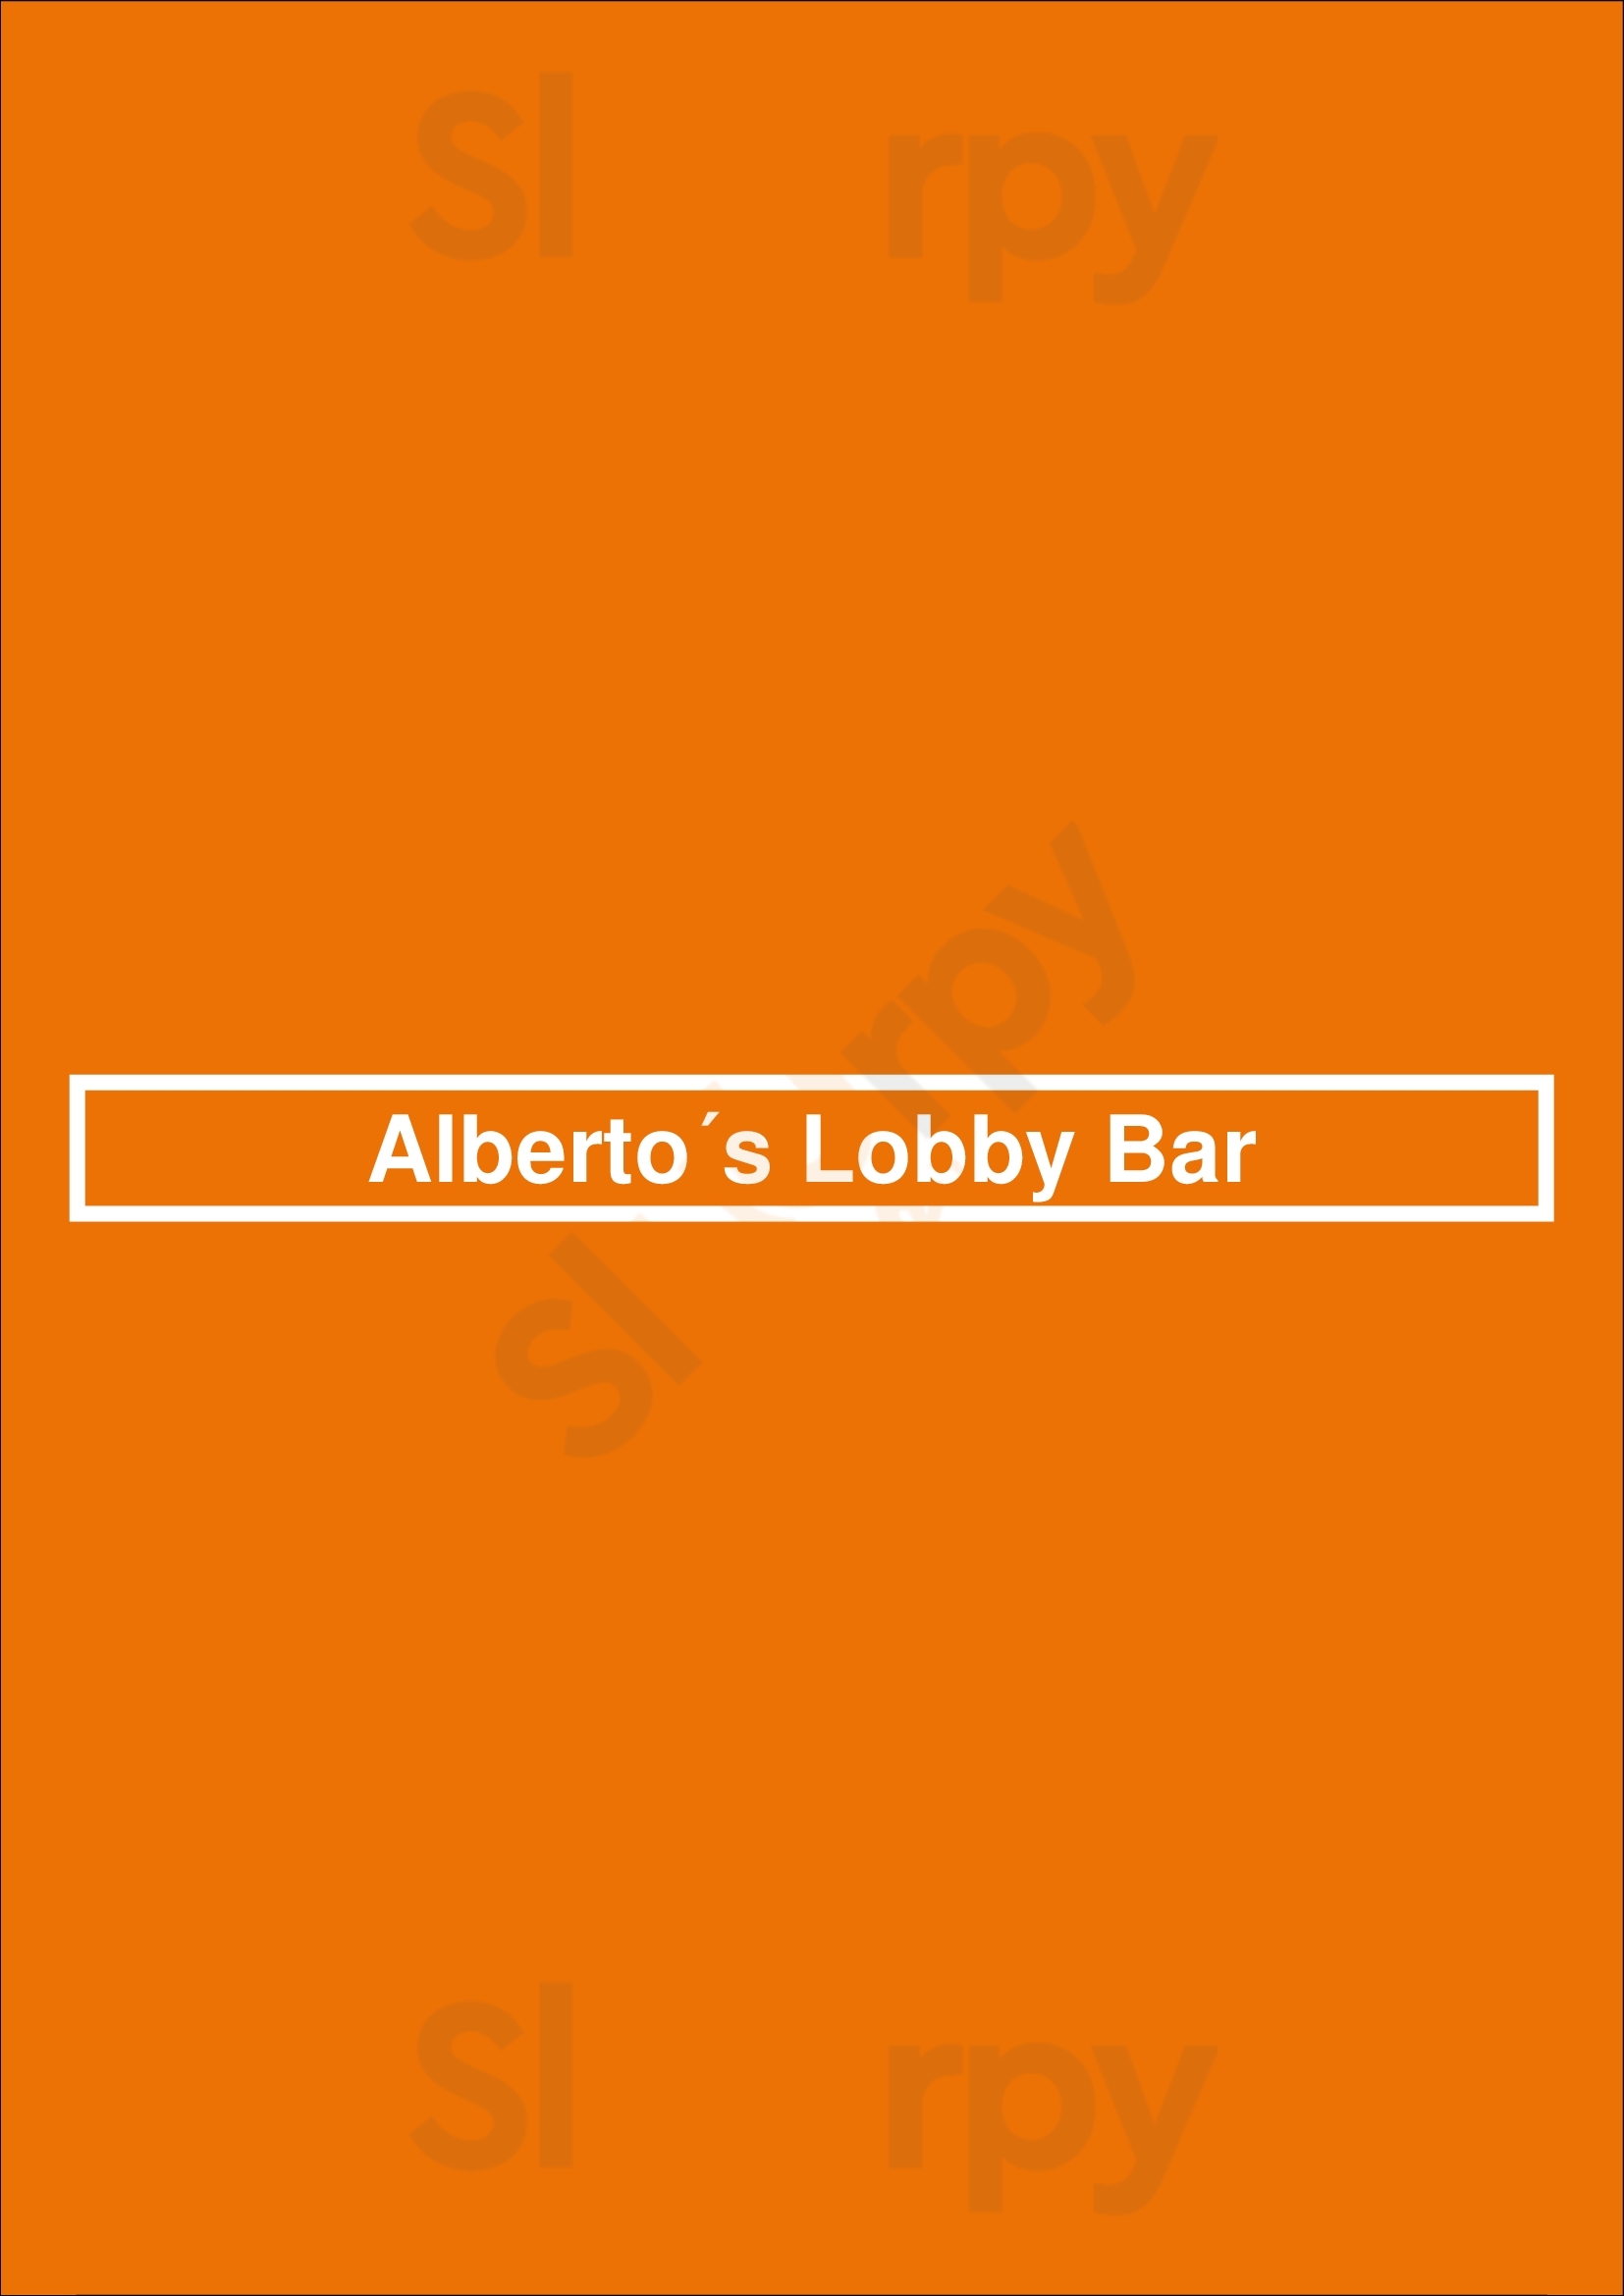 Alberto's Lobby Bar Buenos Aires Menu - 1